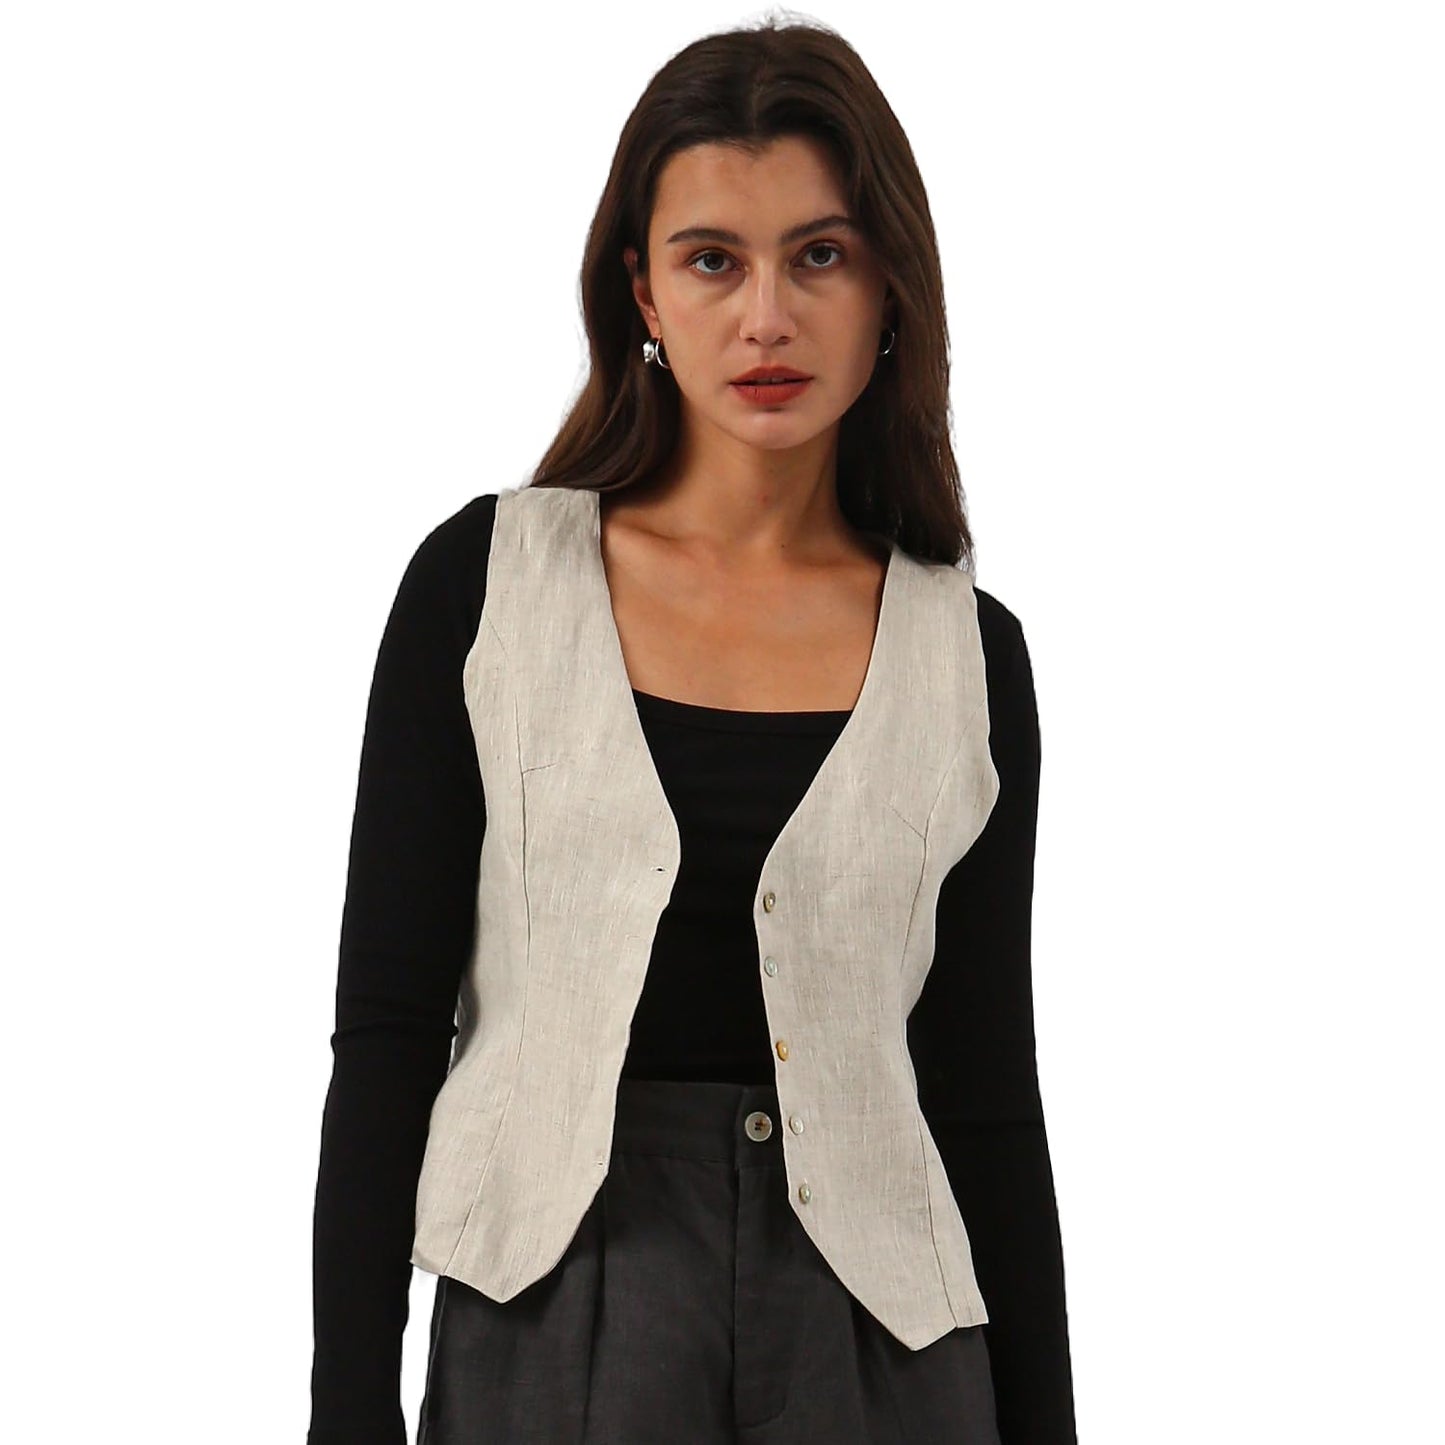 NTG Fad 100% Linen Sleeveless Waistcoat  Short Vest For Woman